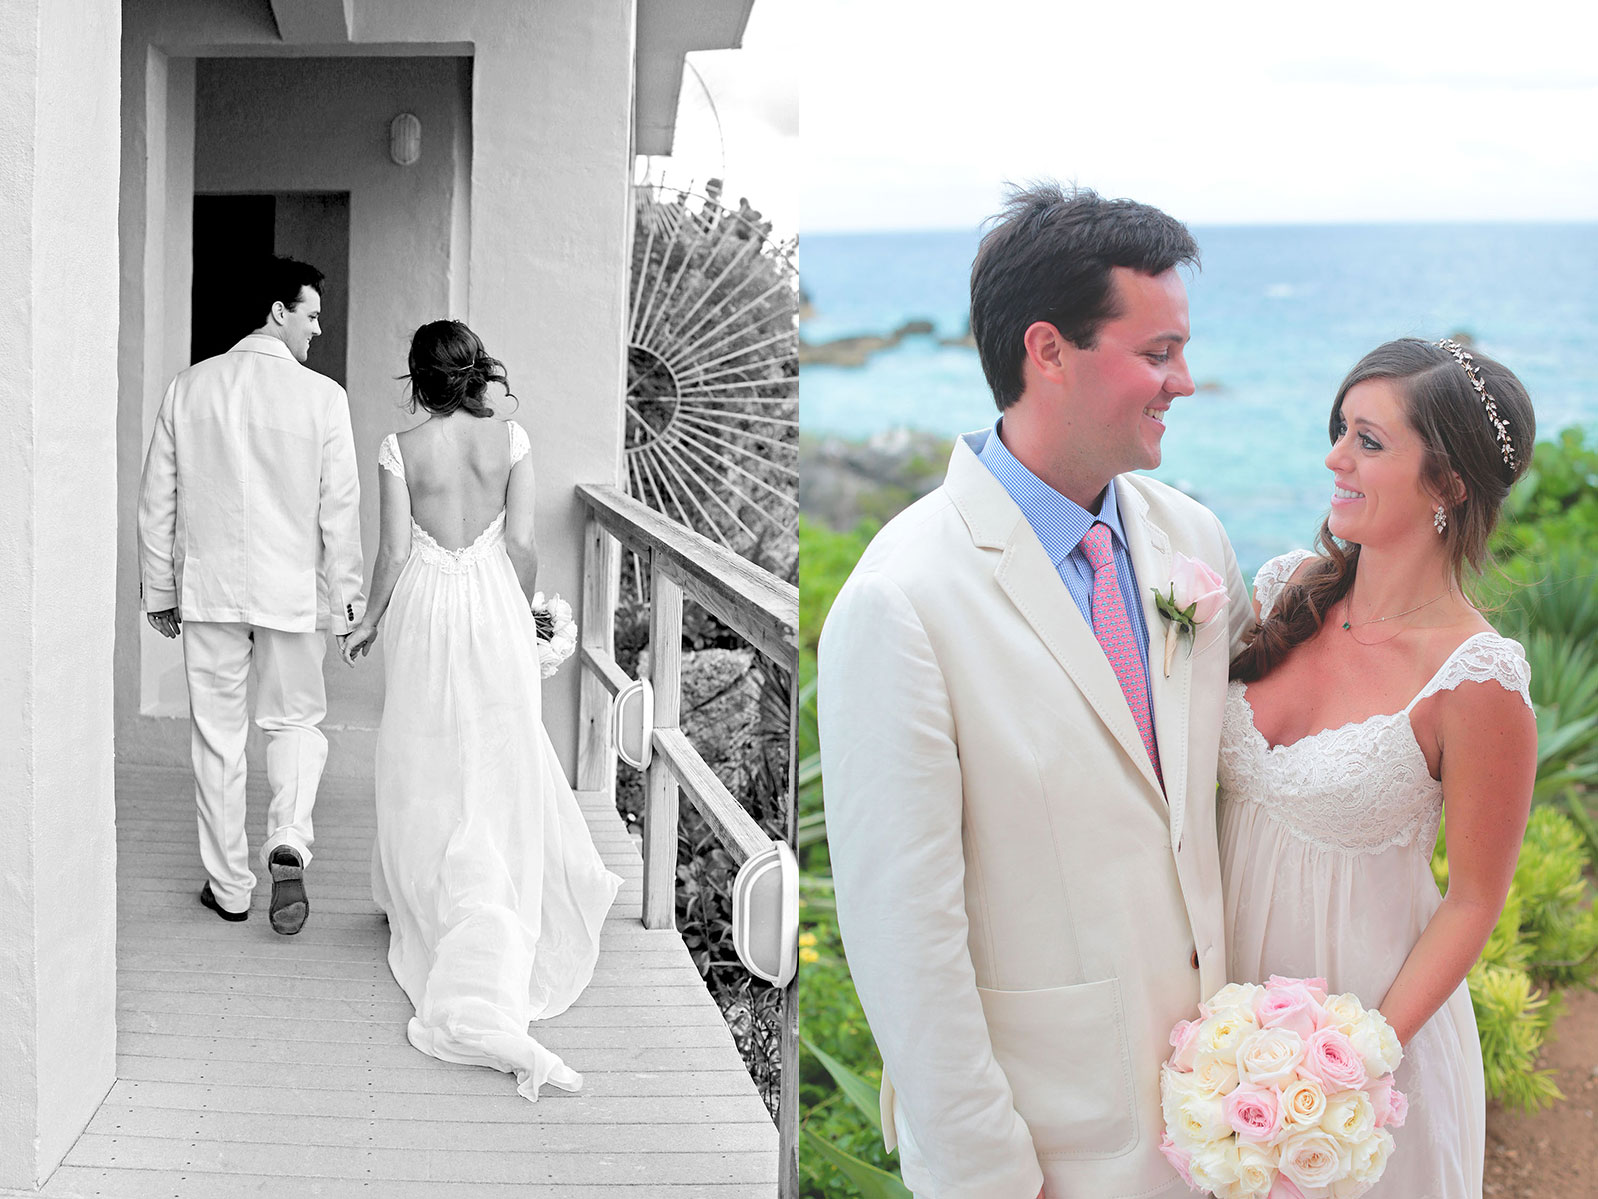 33-JM-BERMDUA-WEDDING-PHOTOGRAPHY-BRIDE-GROOM-DESTINATION-PHOTOGRAPHER-ISLAND-TROPICAL.jpg